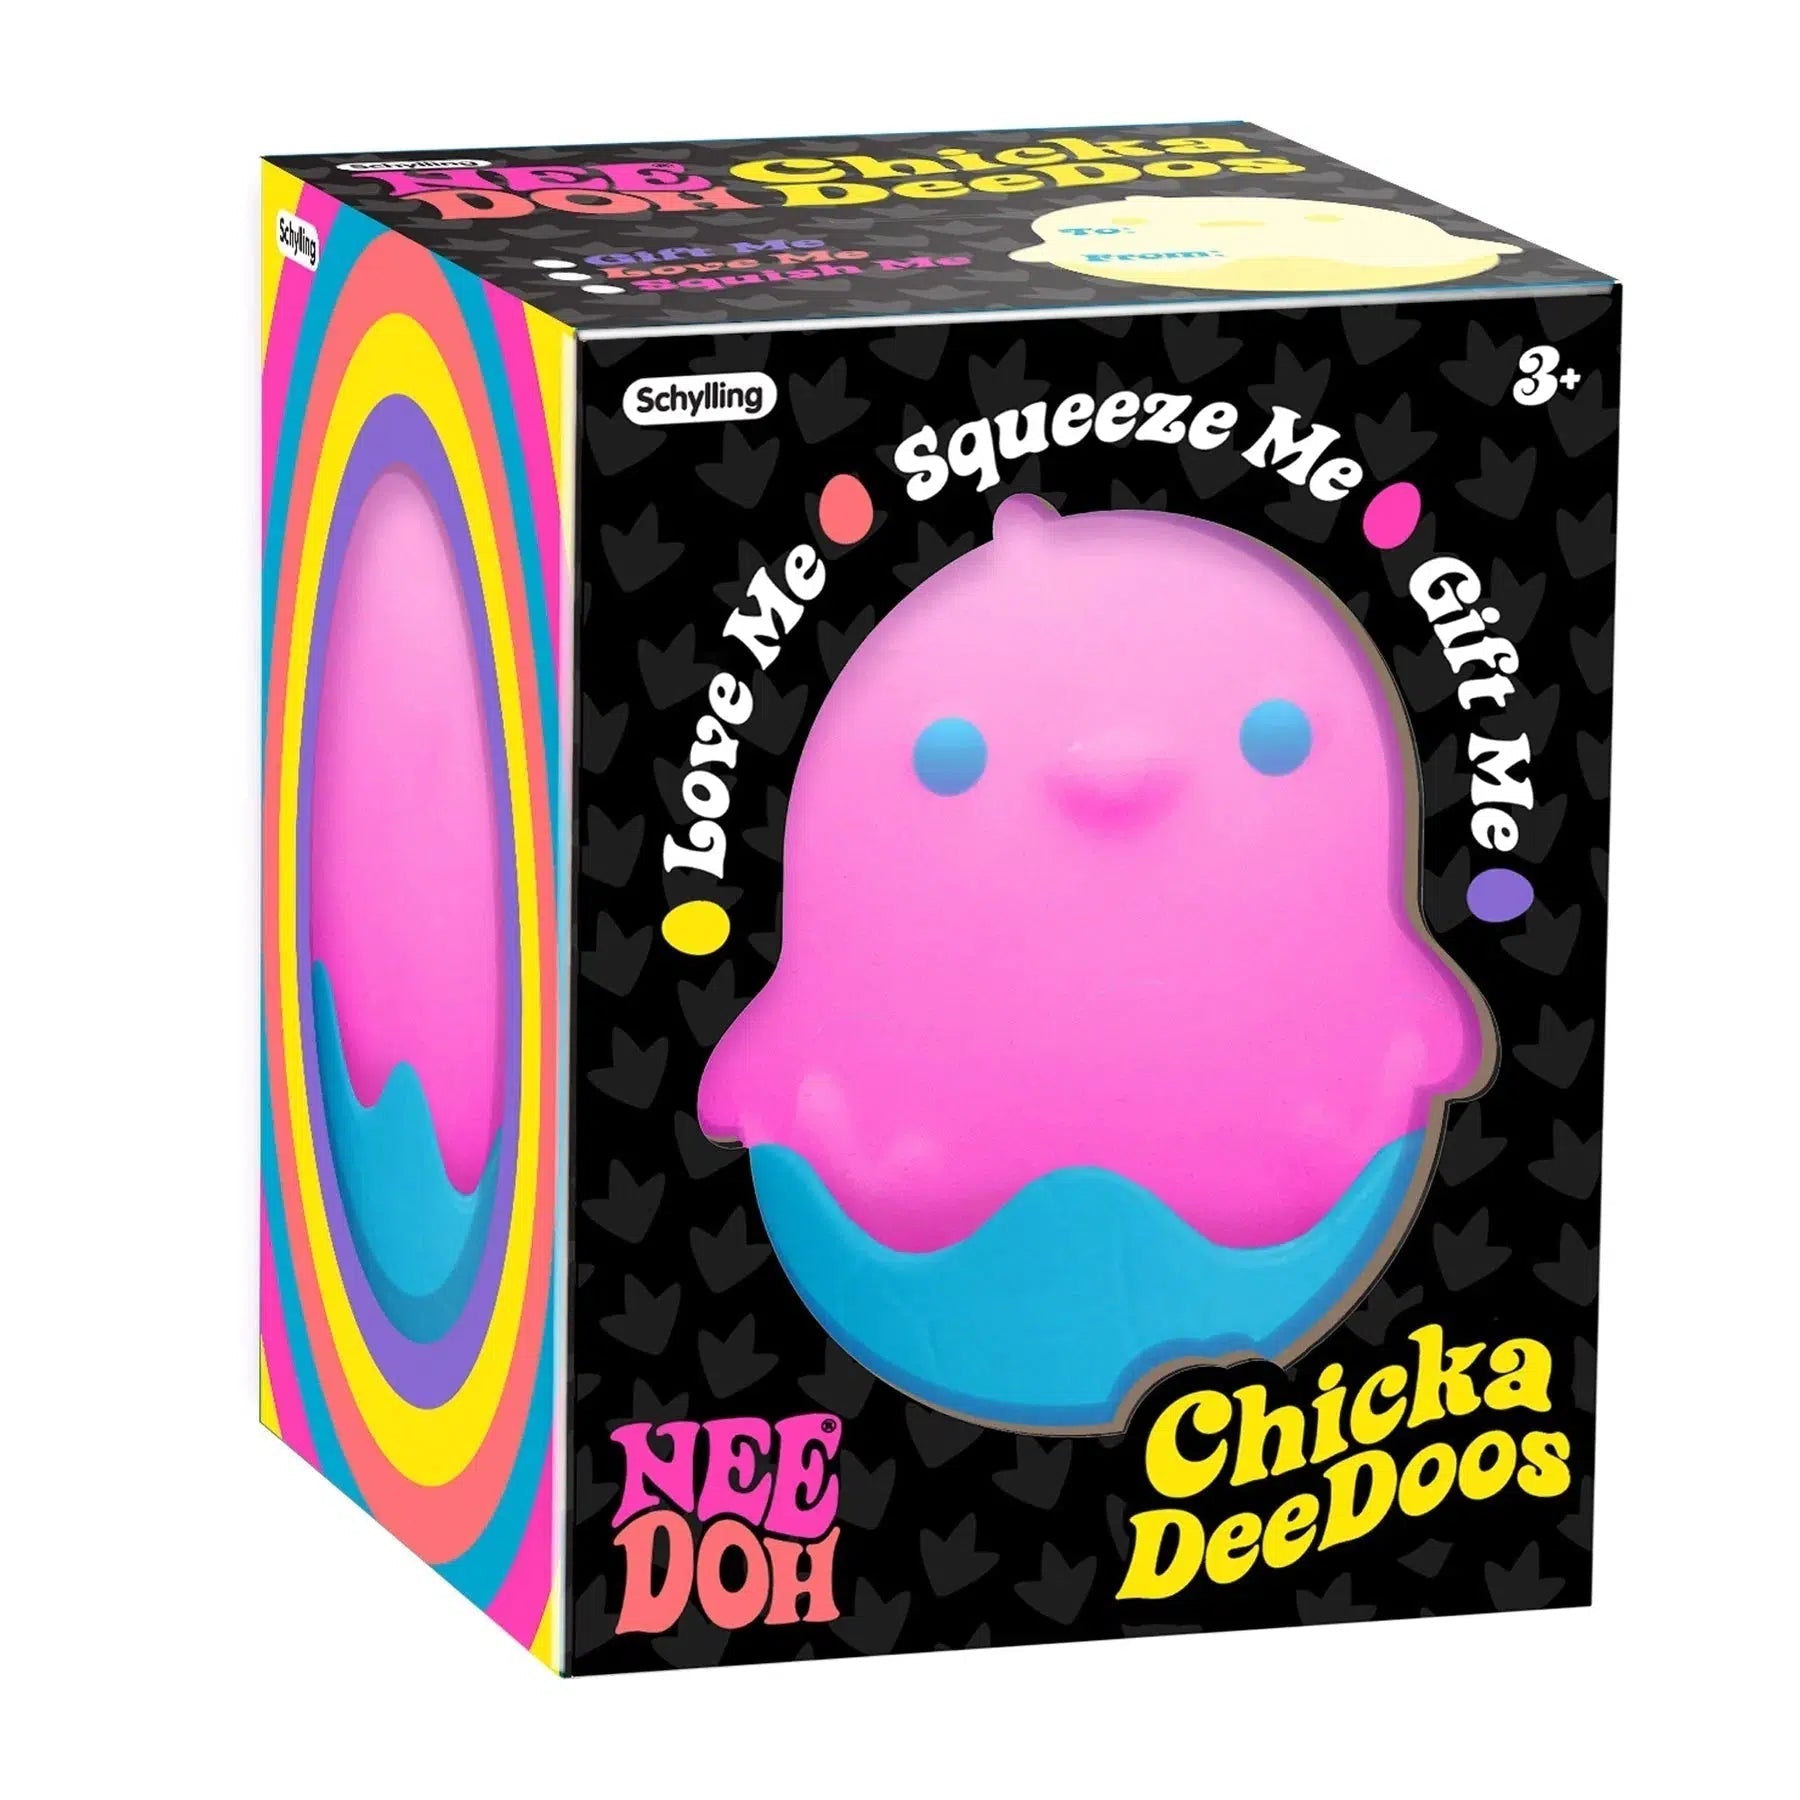 Schylling-Chickadeedoos Needoh-CDDND-Legacy Toys